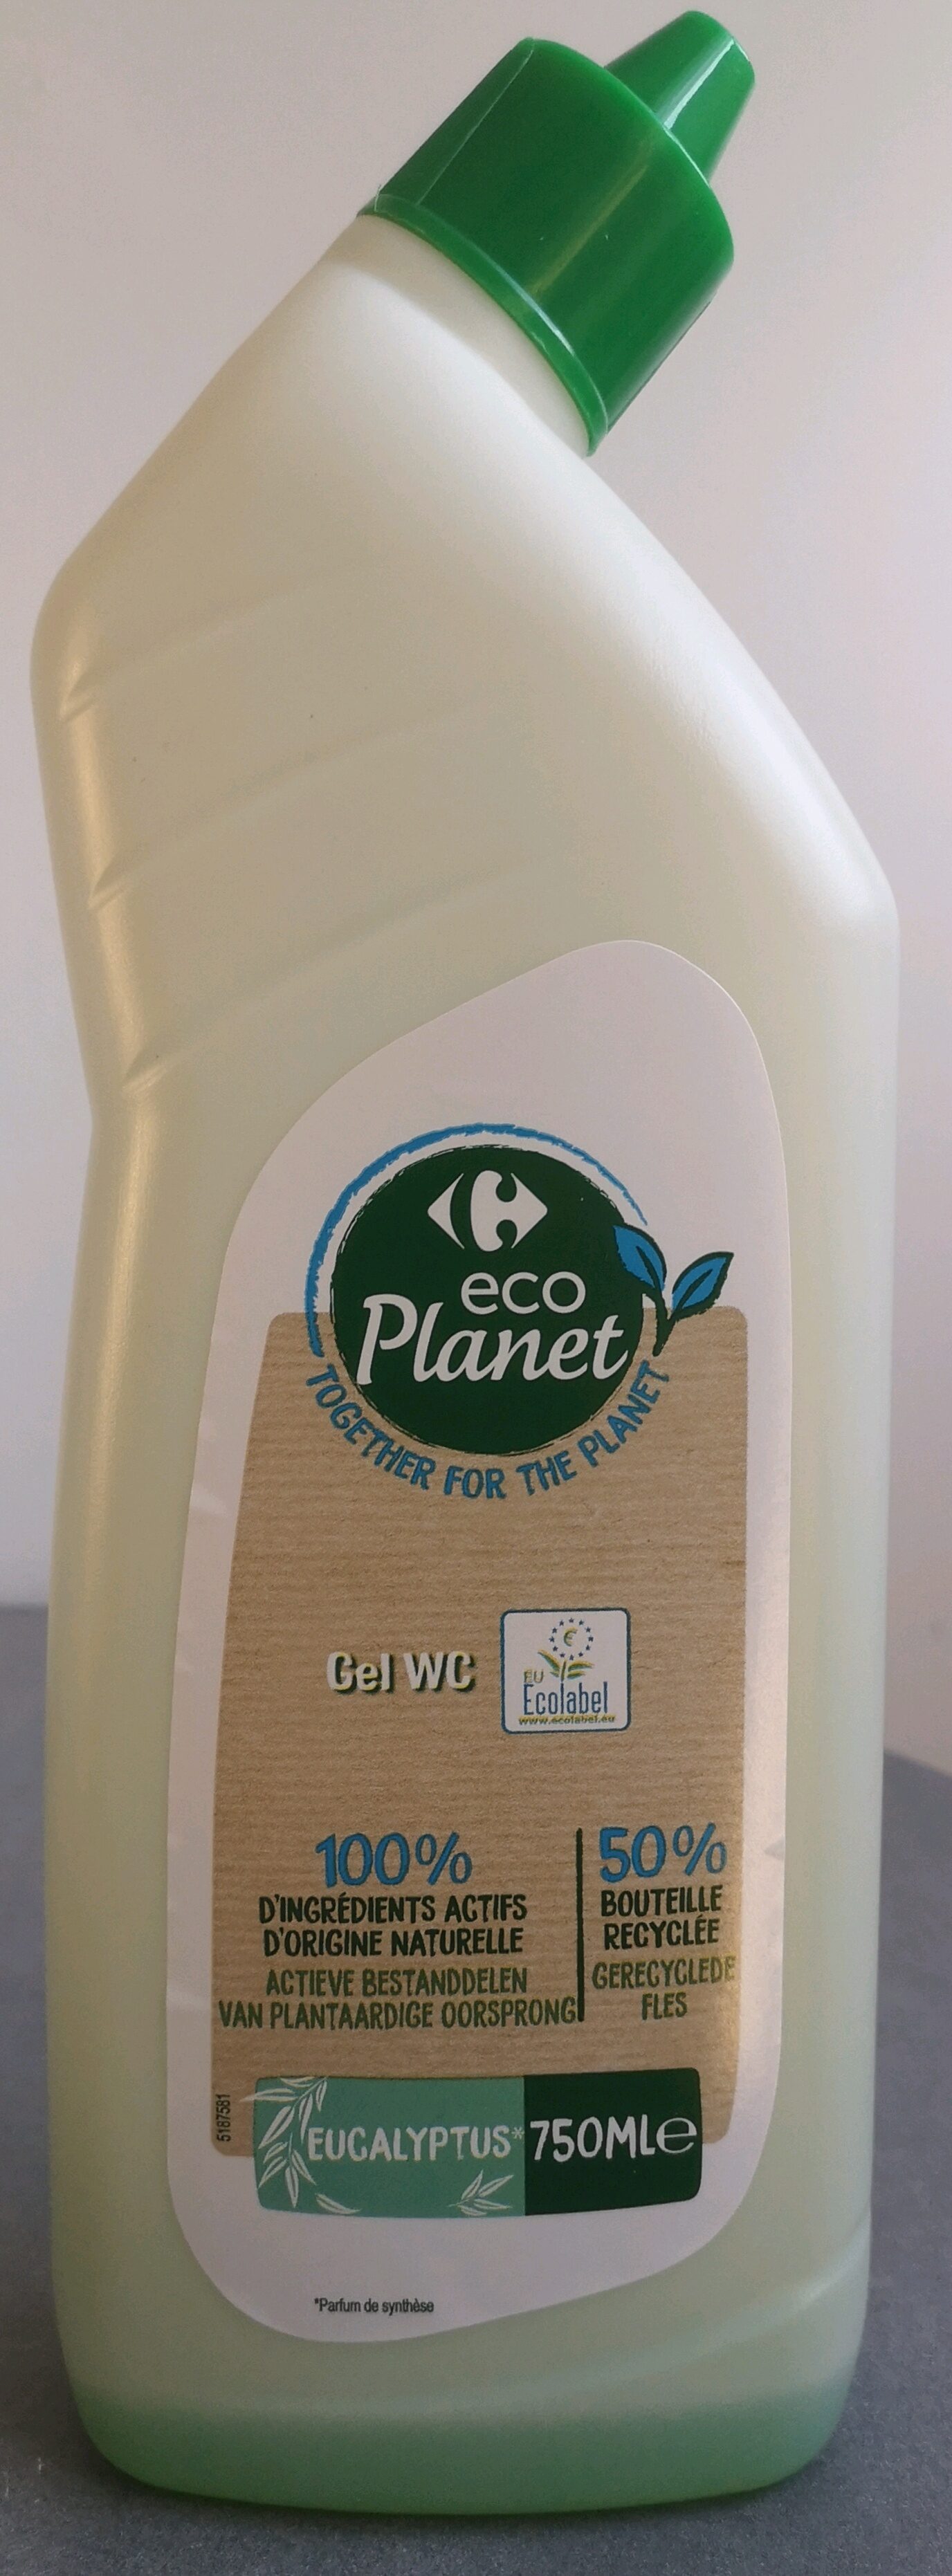 Eco Planet Gel WC Eucalyptus - Product - en